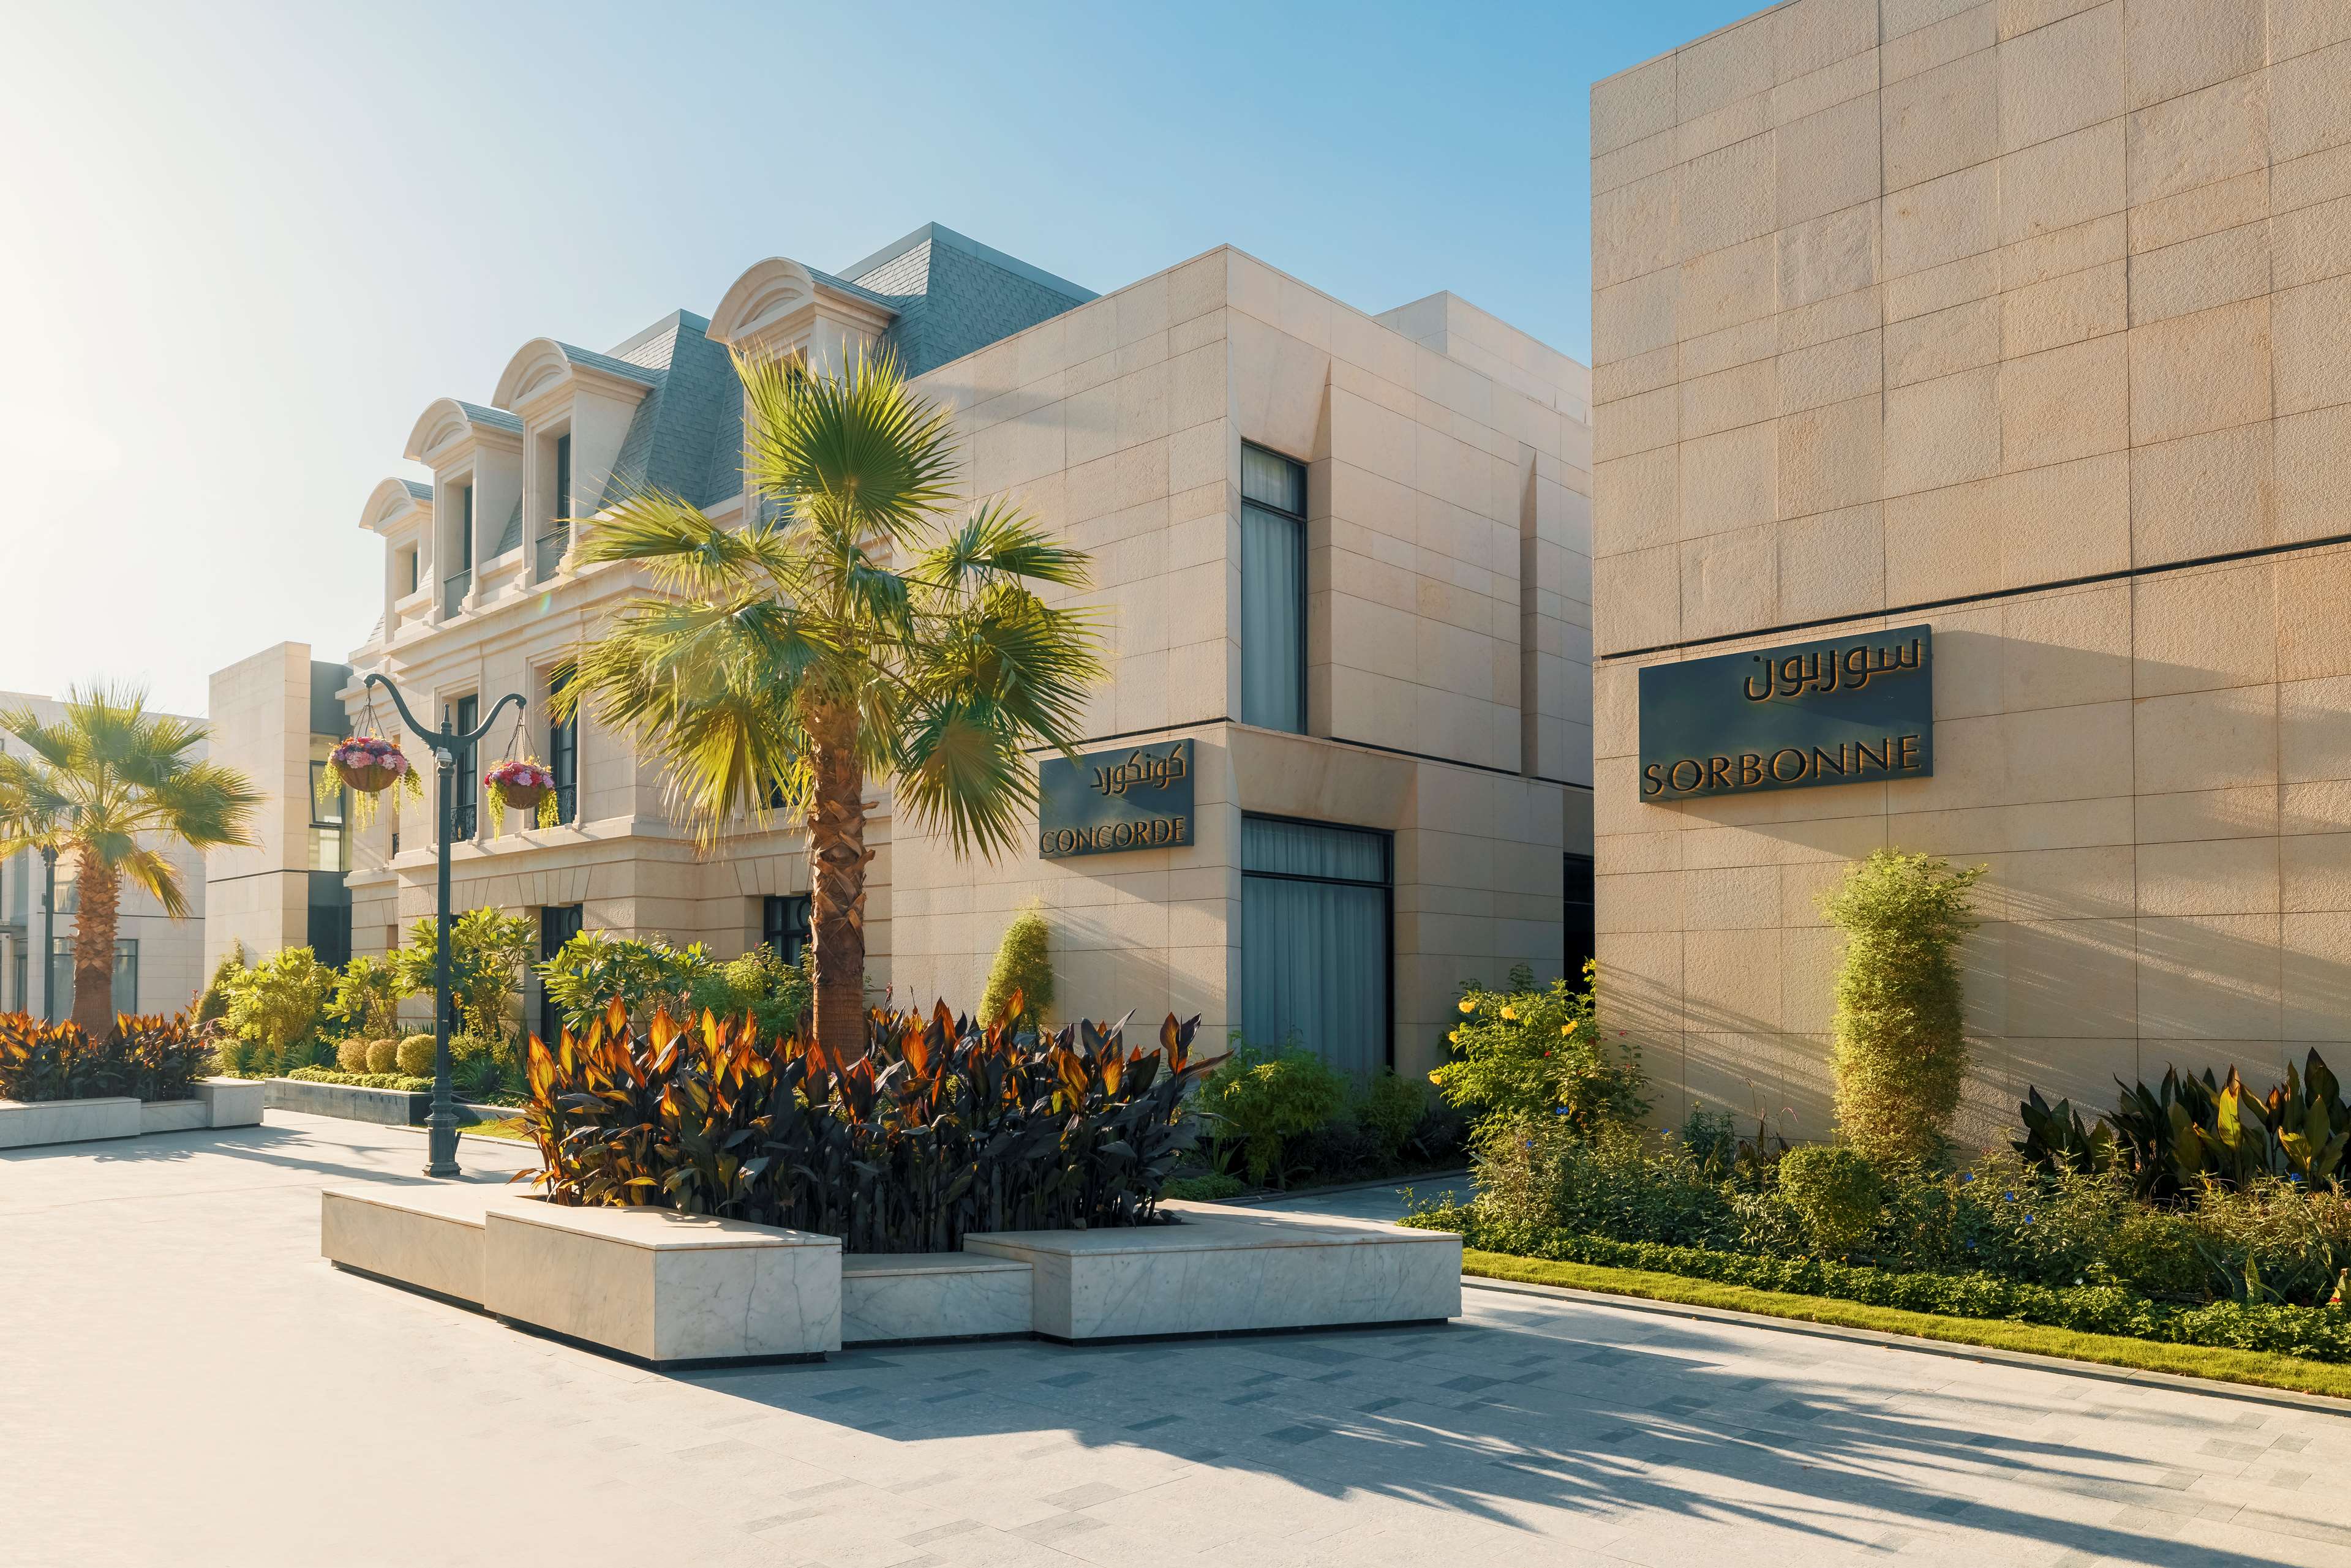 Mansard Riyadh, A Radisson Collection Hotel